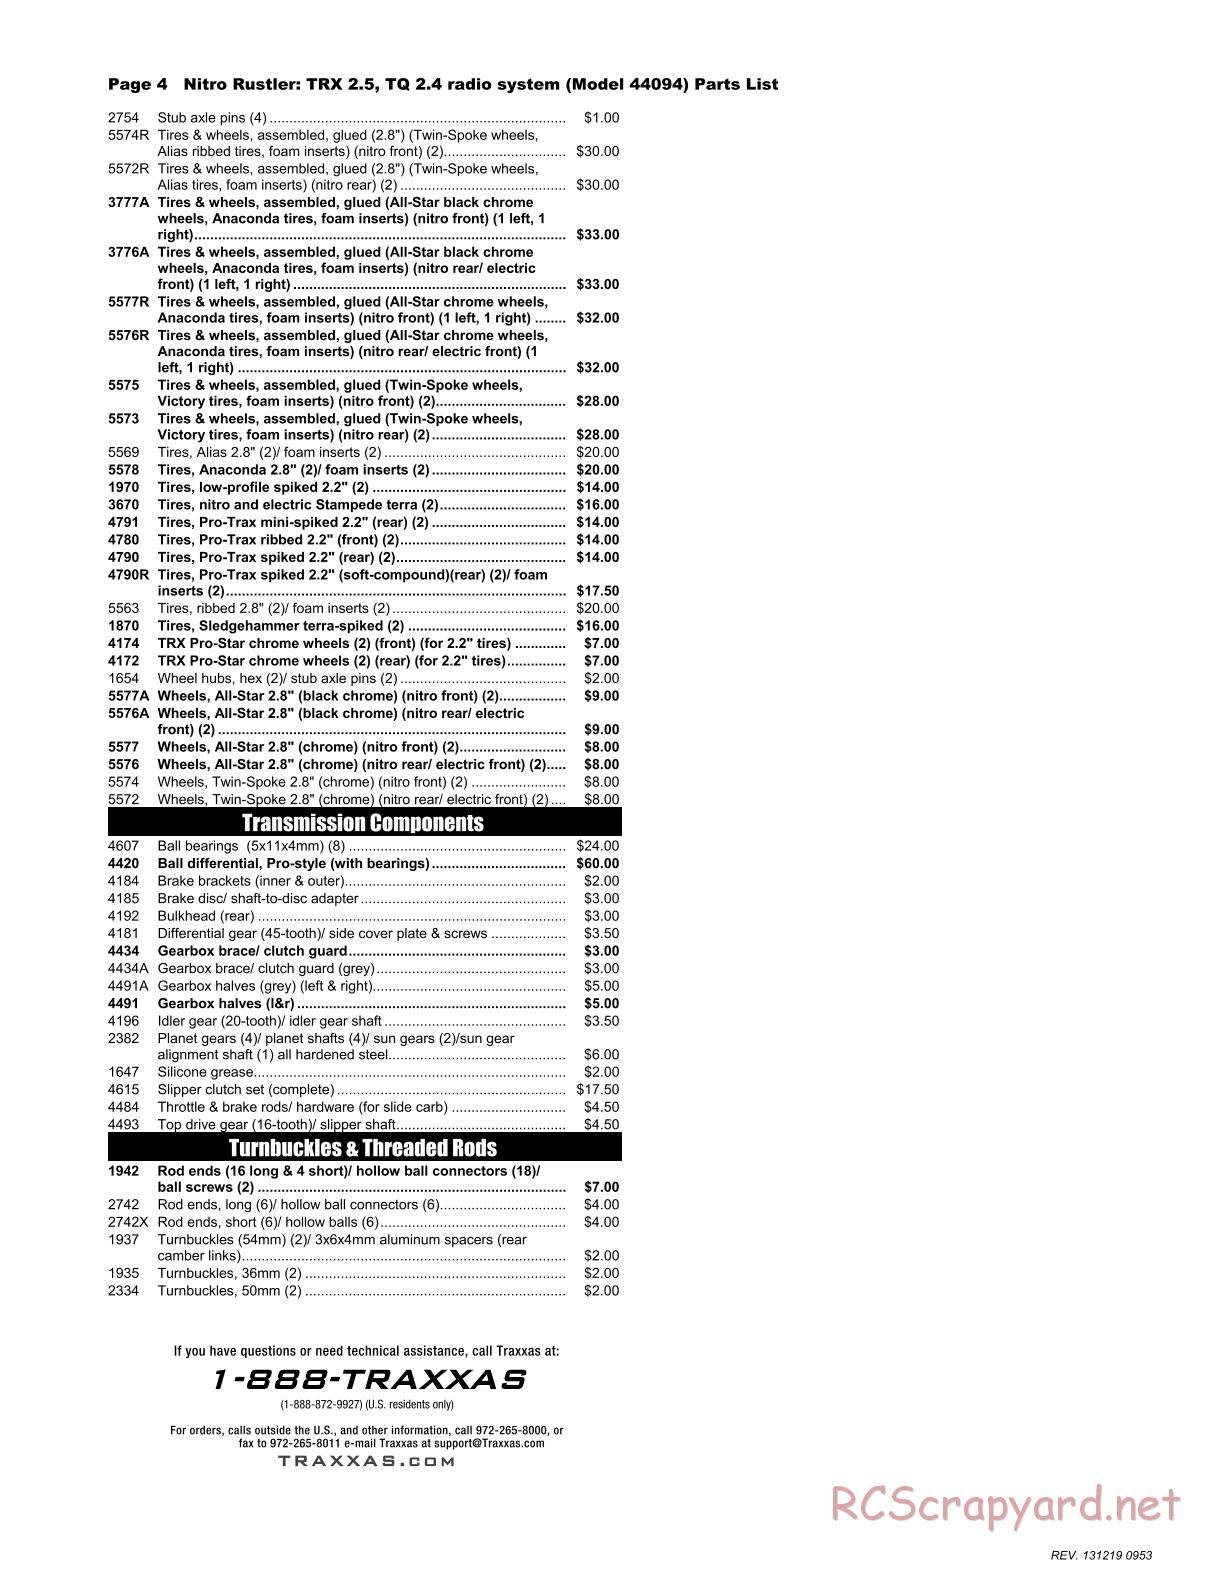 Traxxas - Nitro Rustler (2013) - Parts List - Page 4